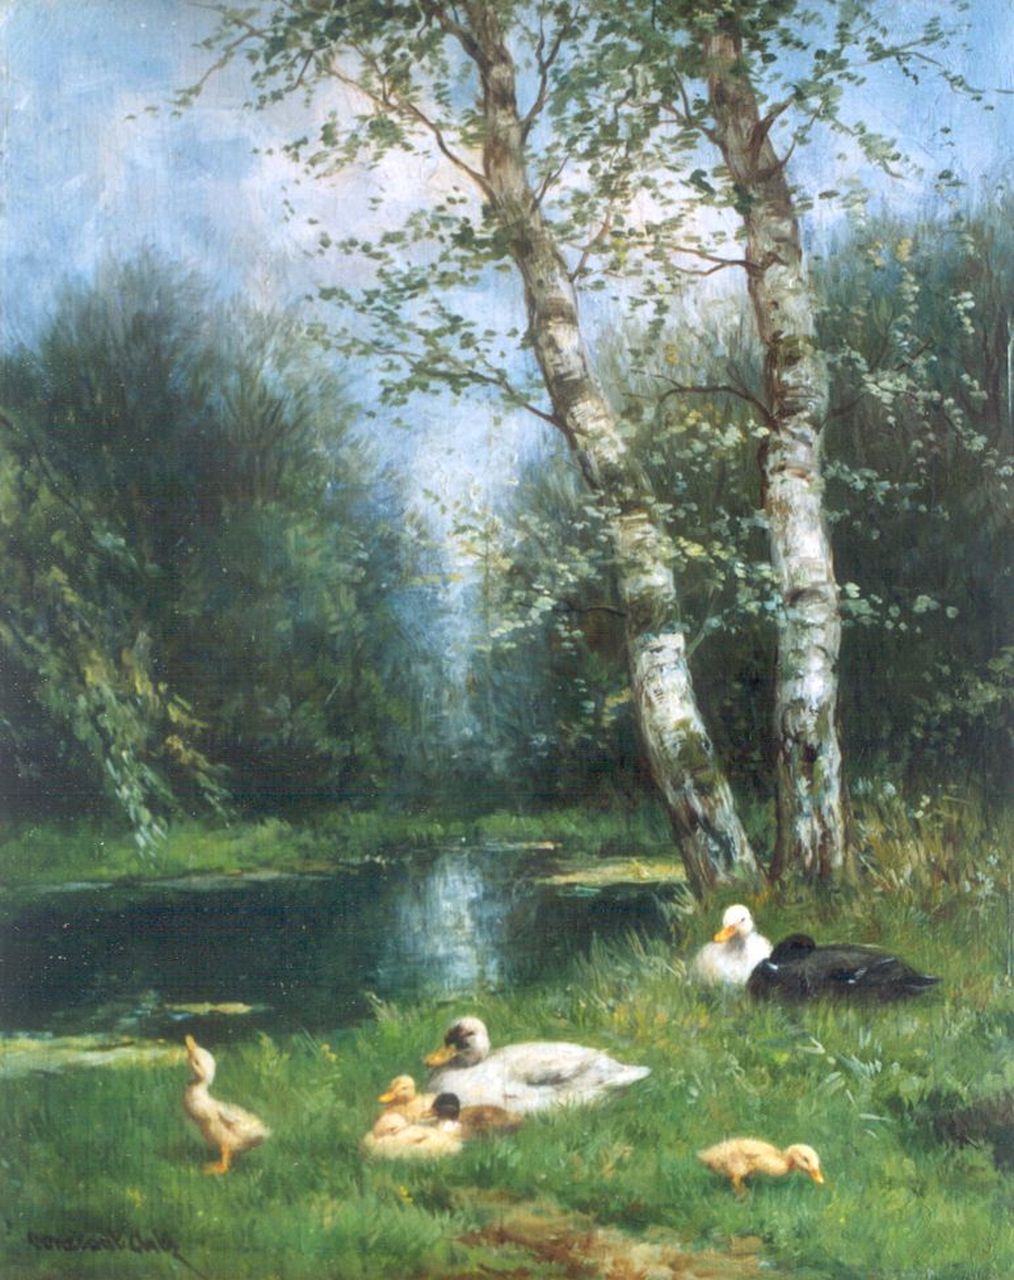 Artz C.D.L.  | 'Constant' David Ludovic Artz, Ducks on the riverbank, oil on panel 30.3 x 24.2 cm, signed l.l.